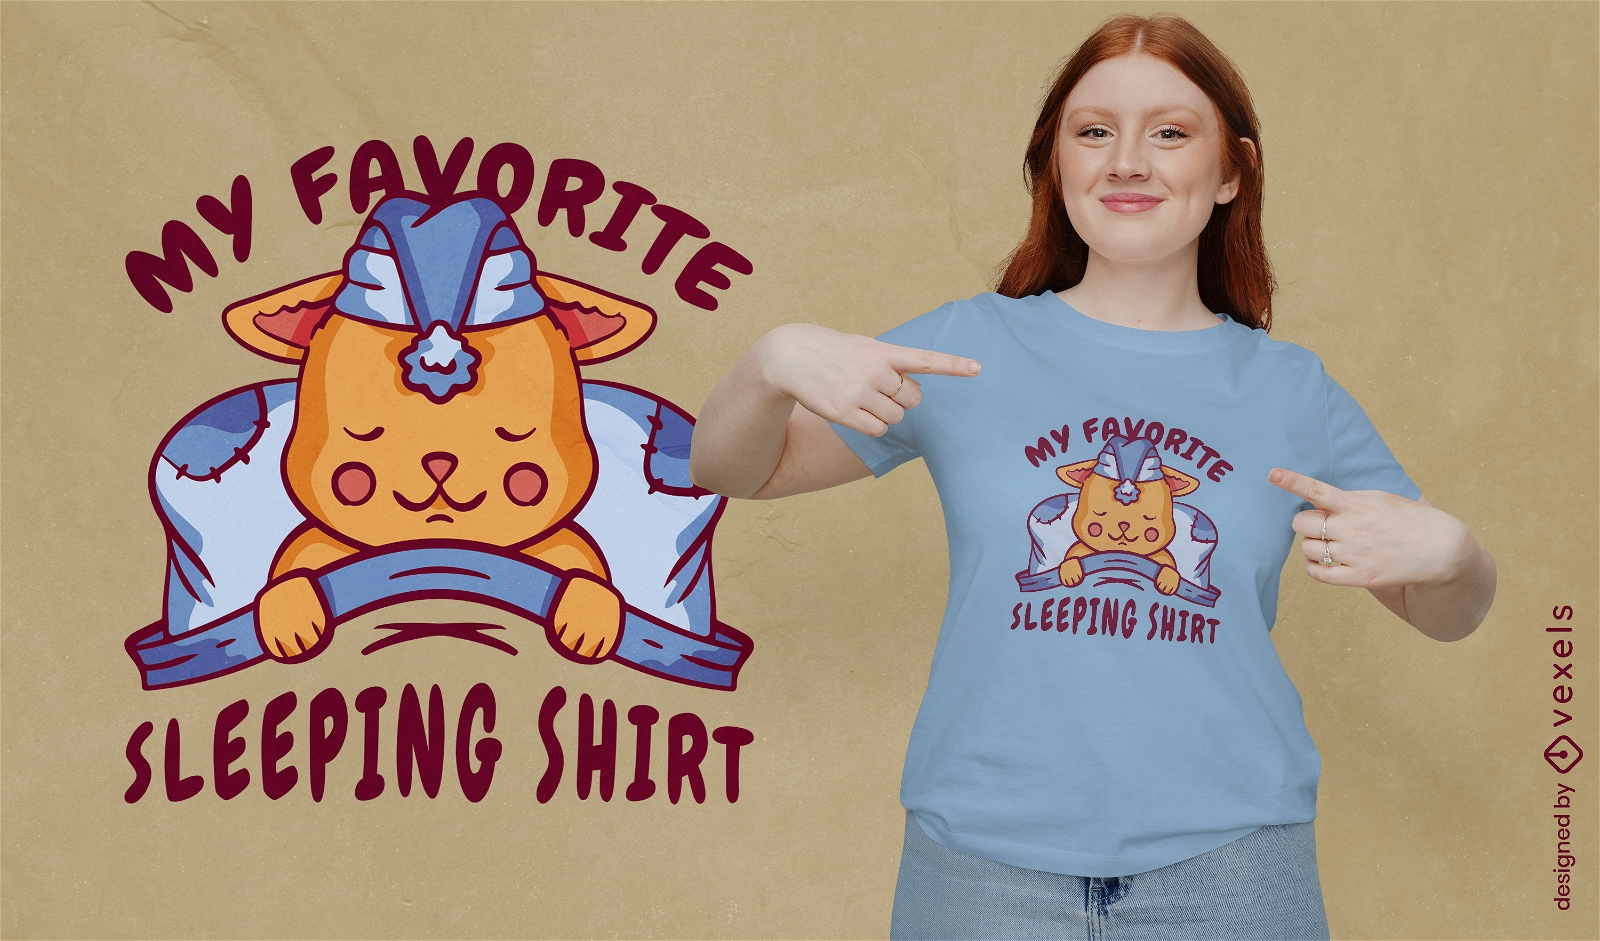 Cat sleeping in bed t-shirt design